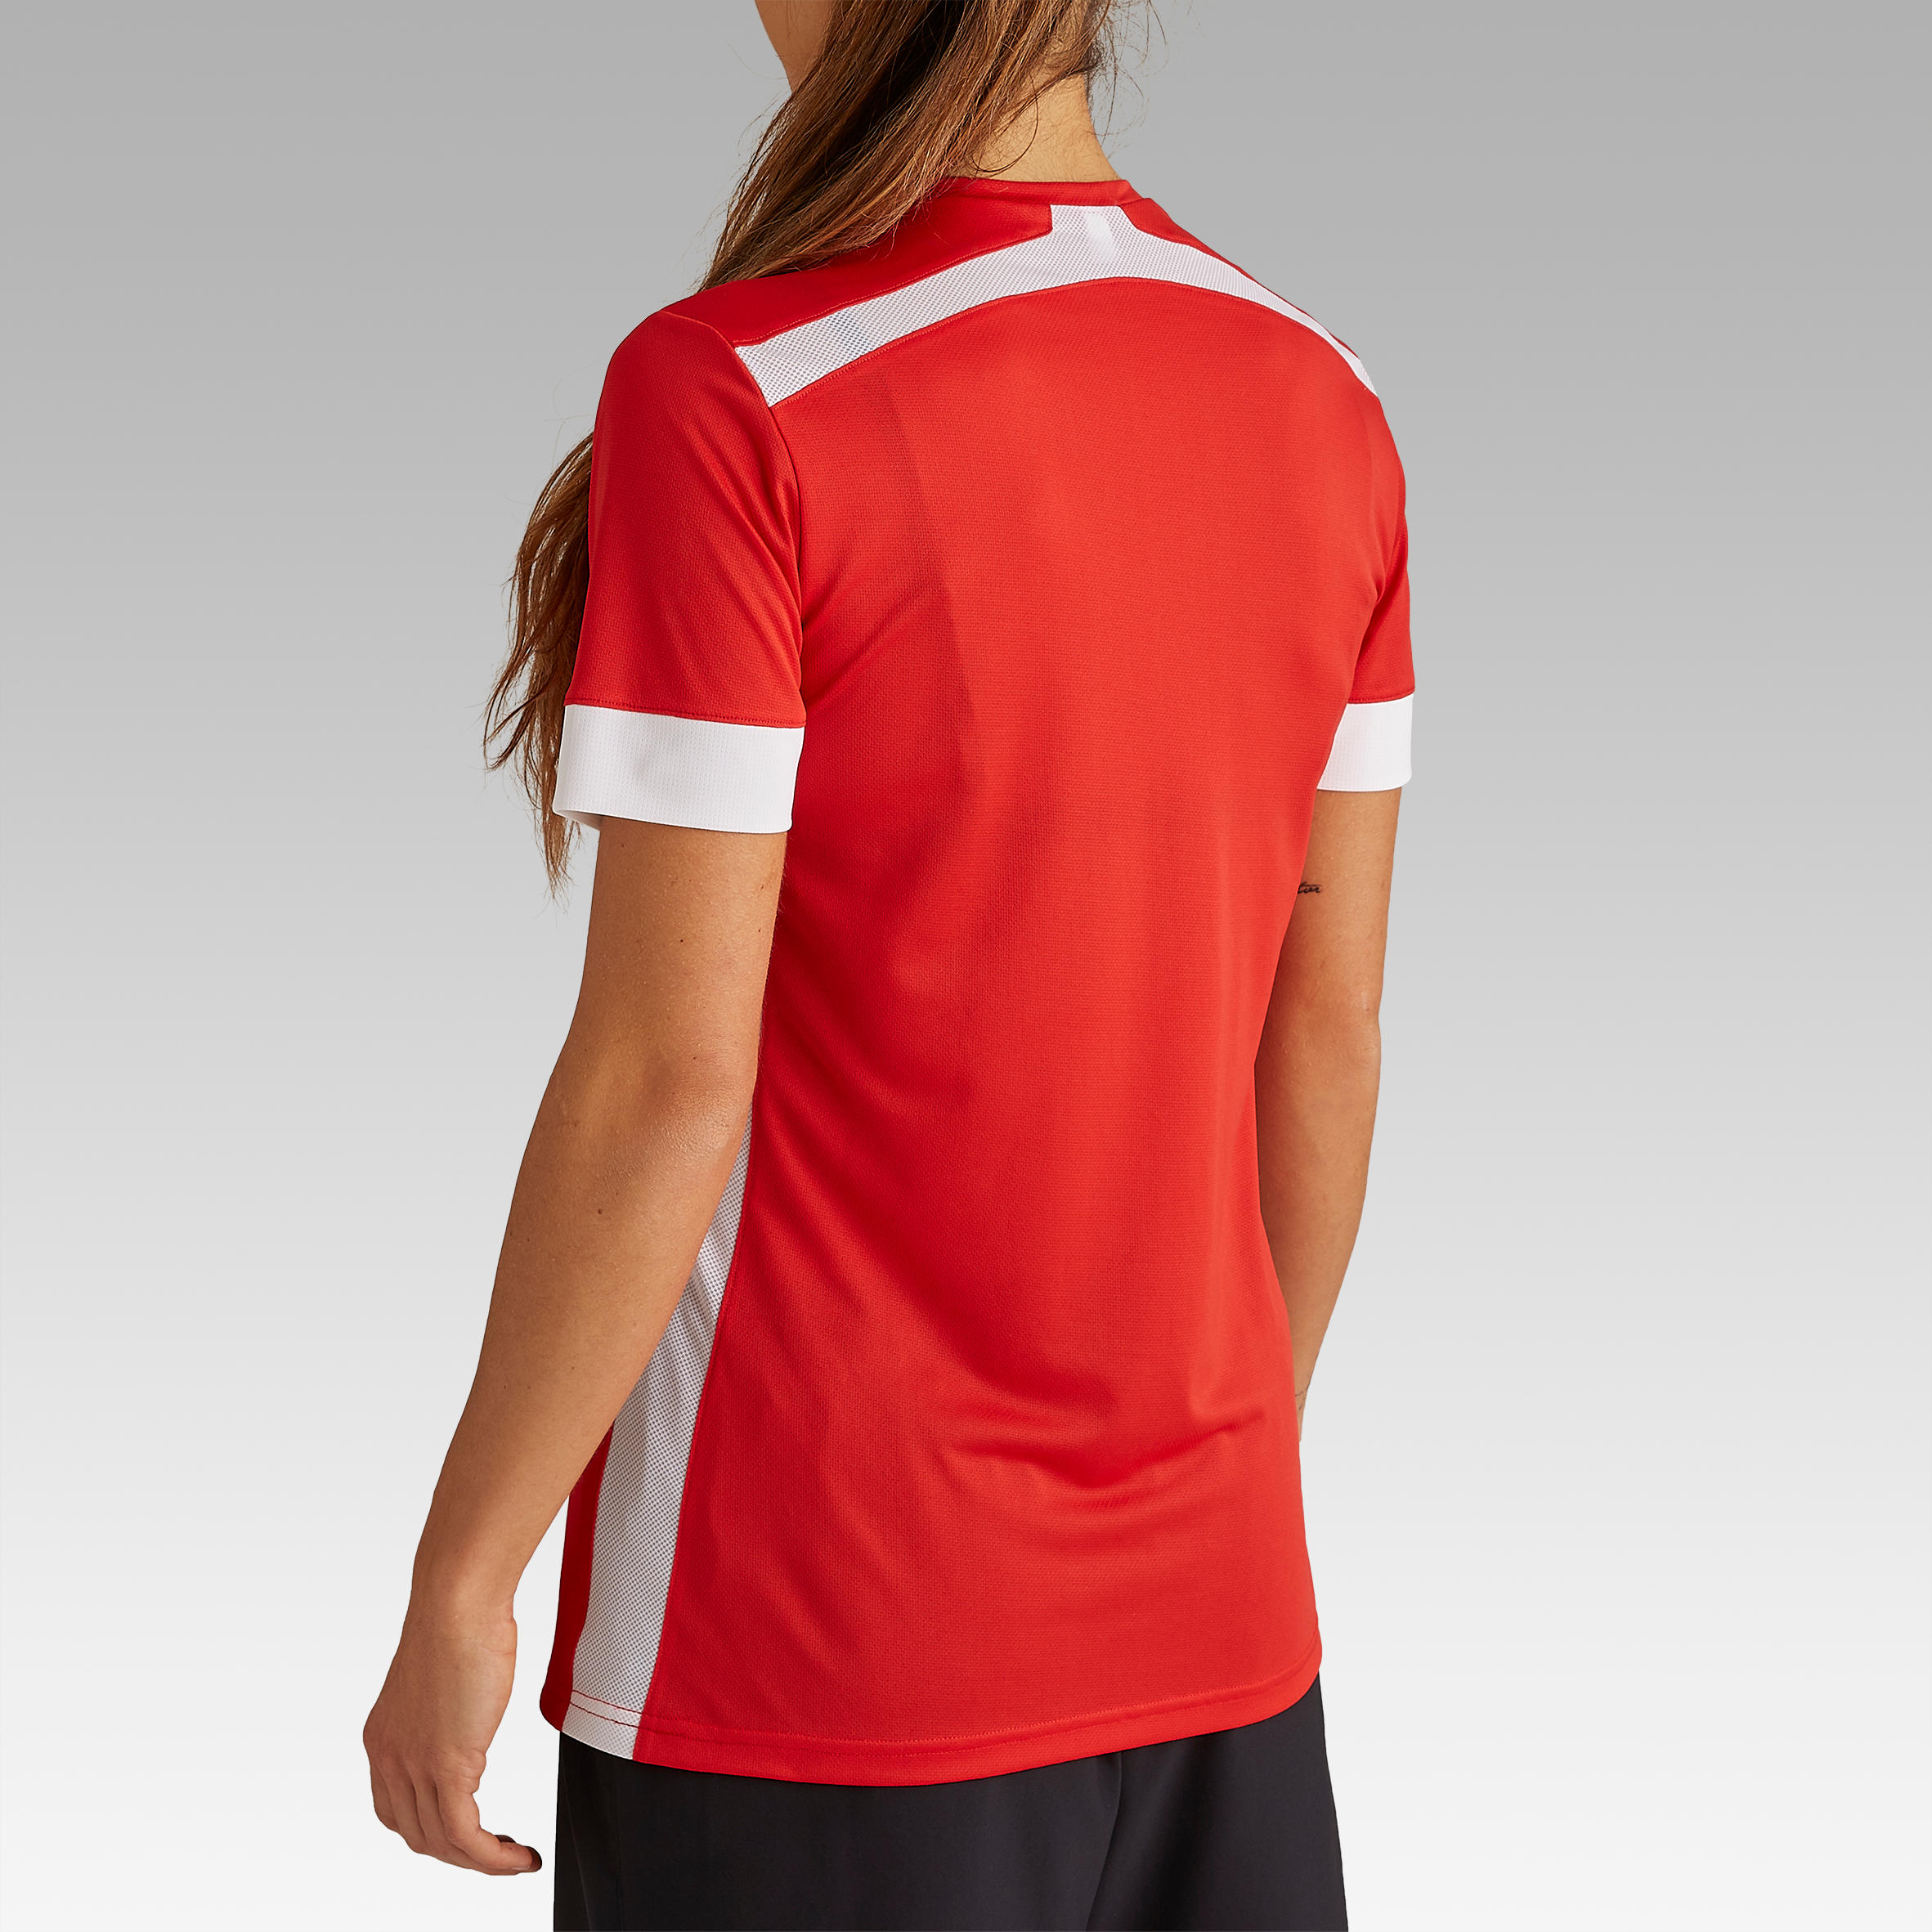 F500 Women's Football Jersey - Red/White 5/10